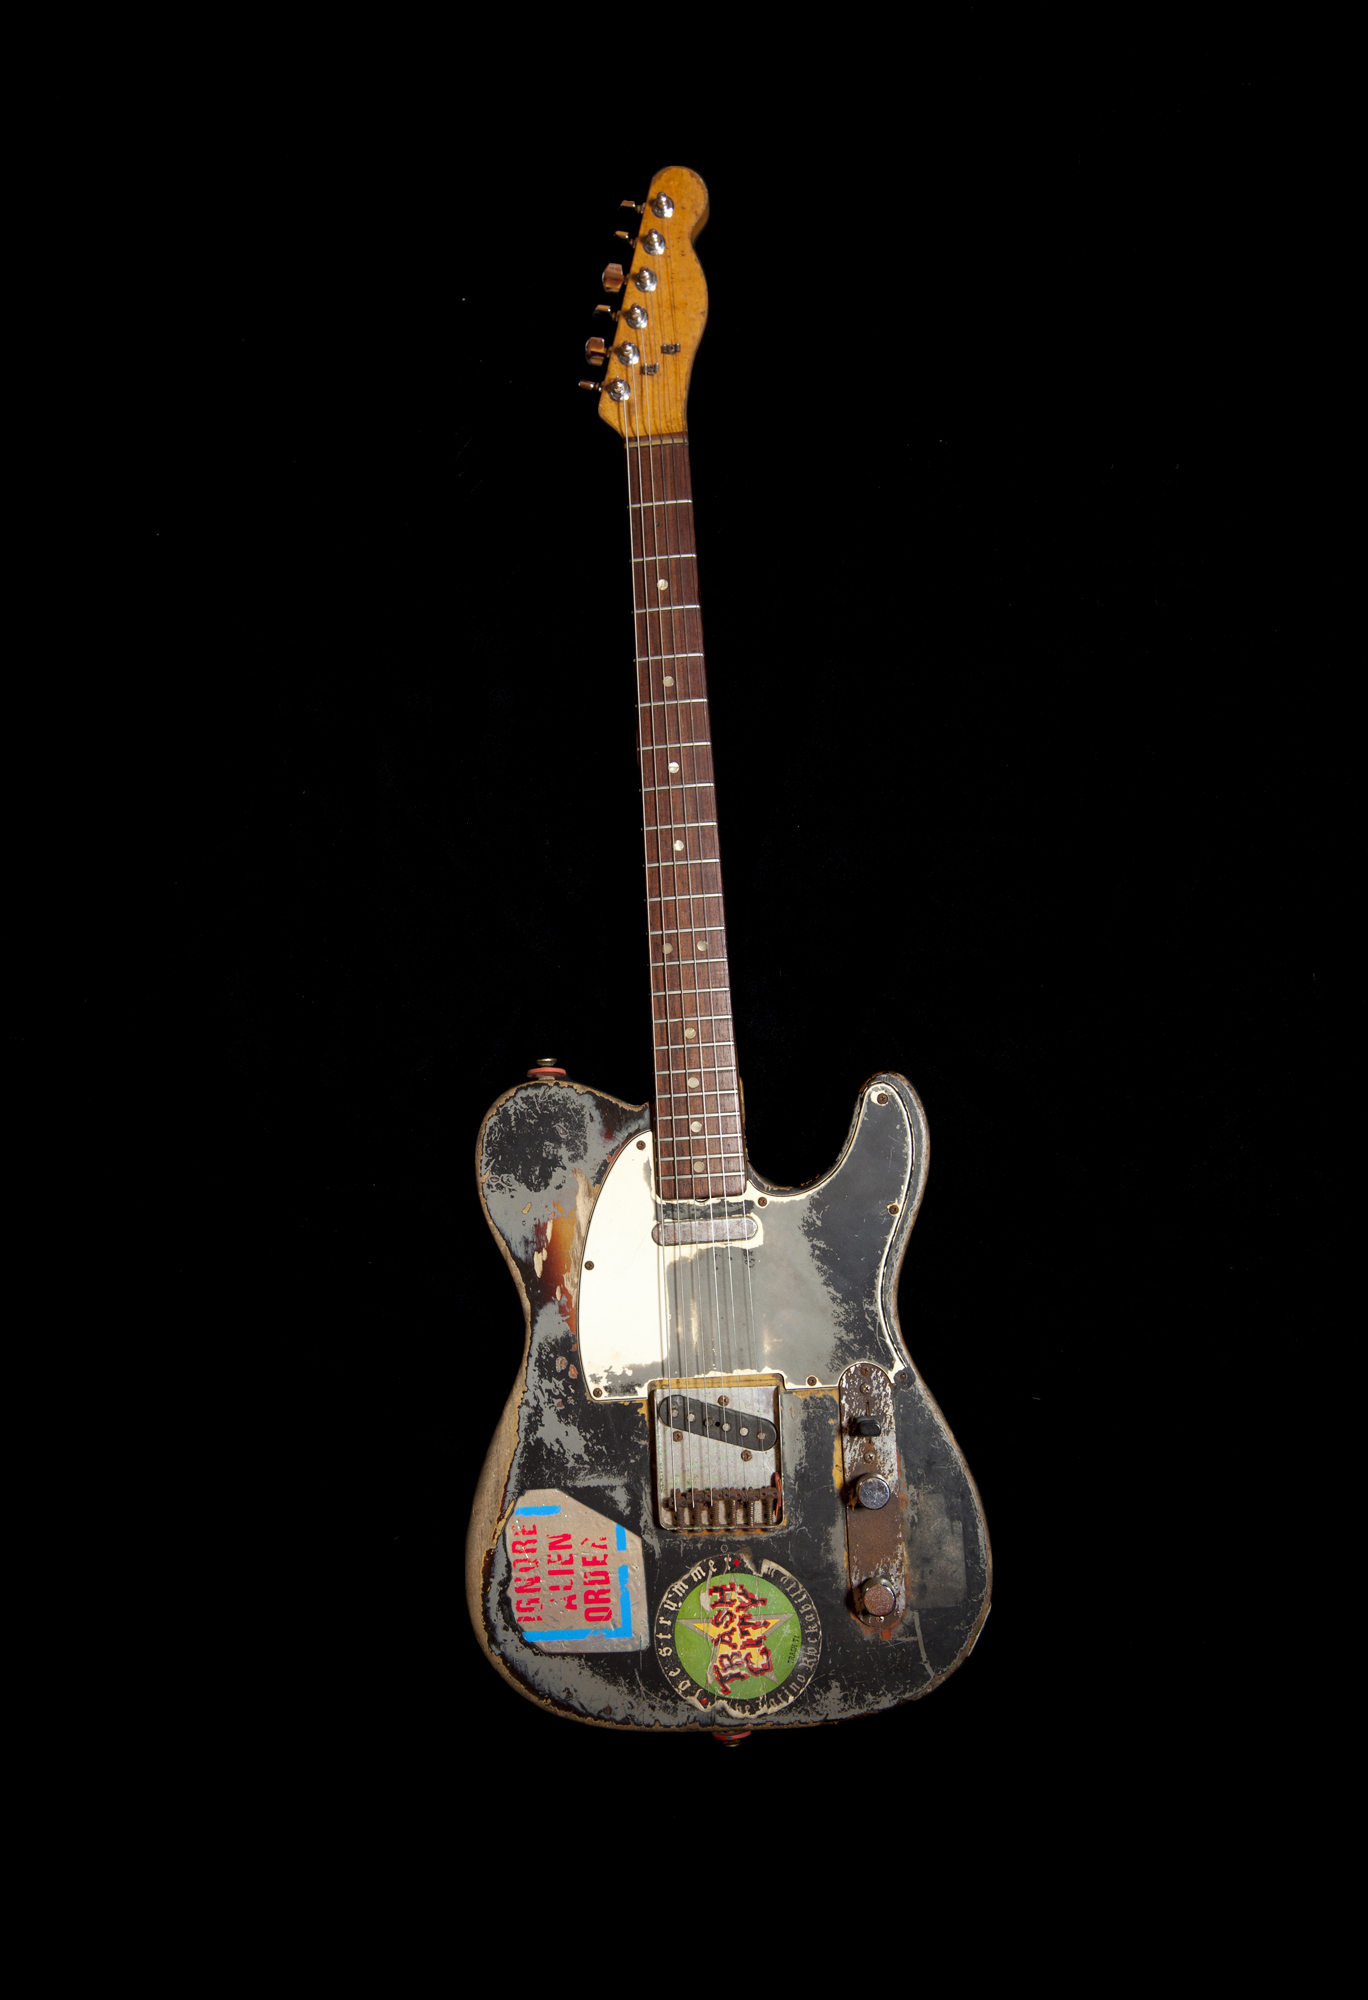 a picture of Joe Strummer's 1966 Fender Telecaster guitar